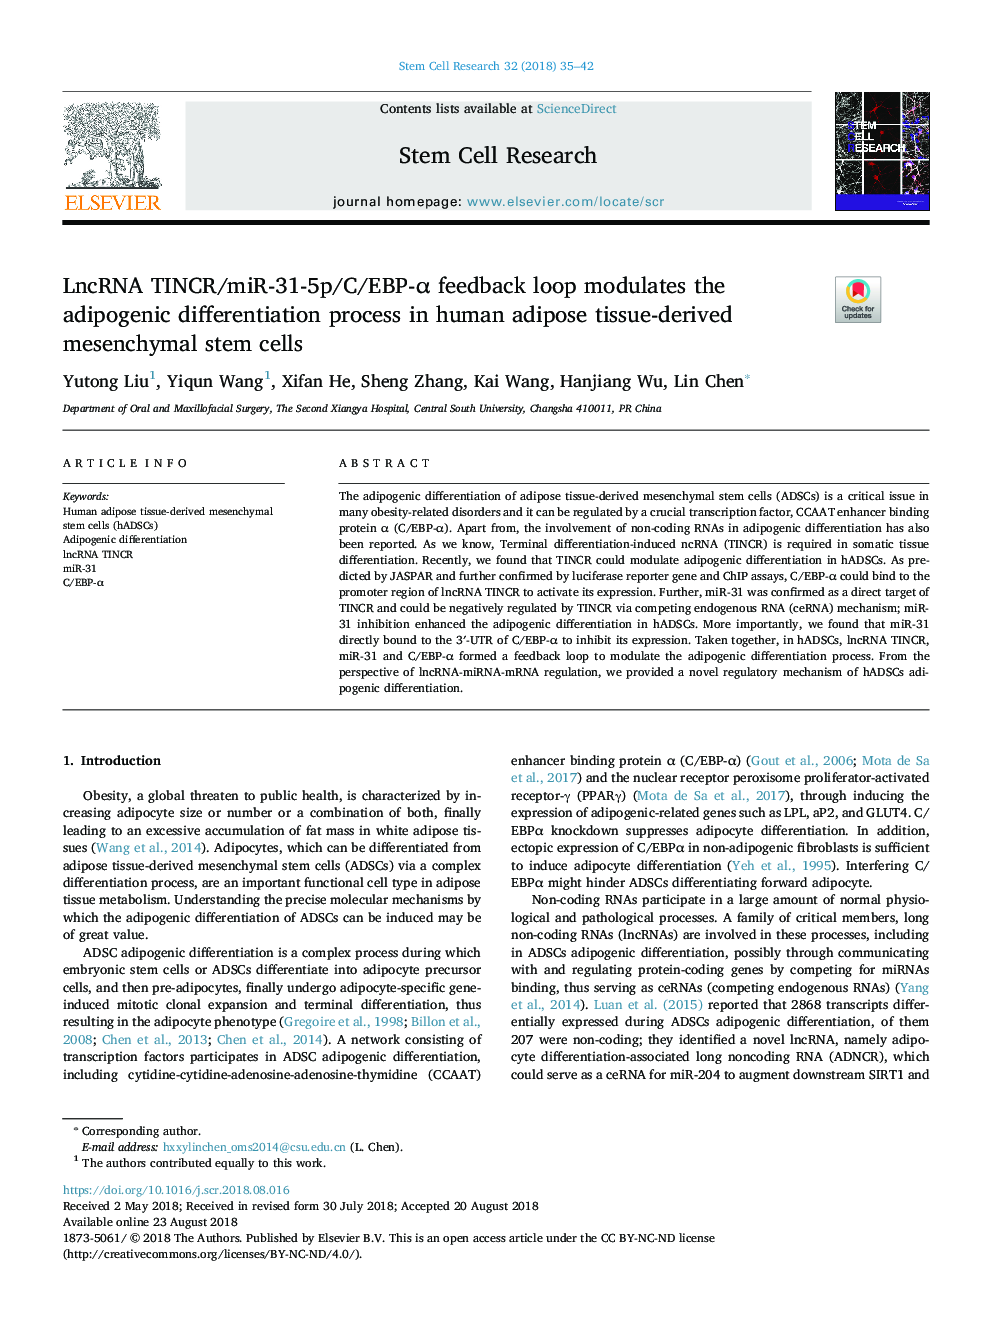 LncRNA TINCR/miR-31-5p/C/EBP-Î± feedback loop modulates the adipogenic differentiation process in human adipose tissue-derived mesenchymal stem cells